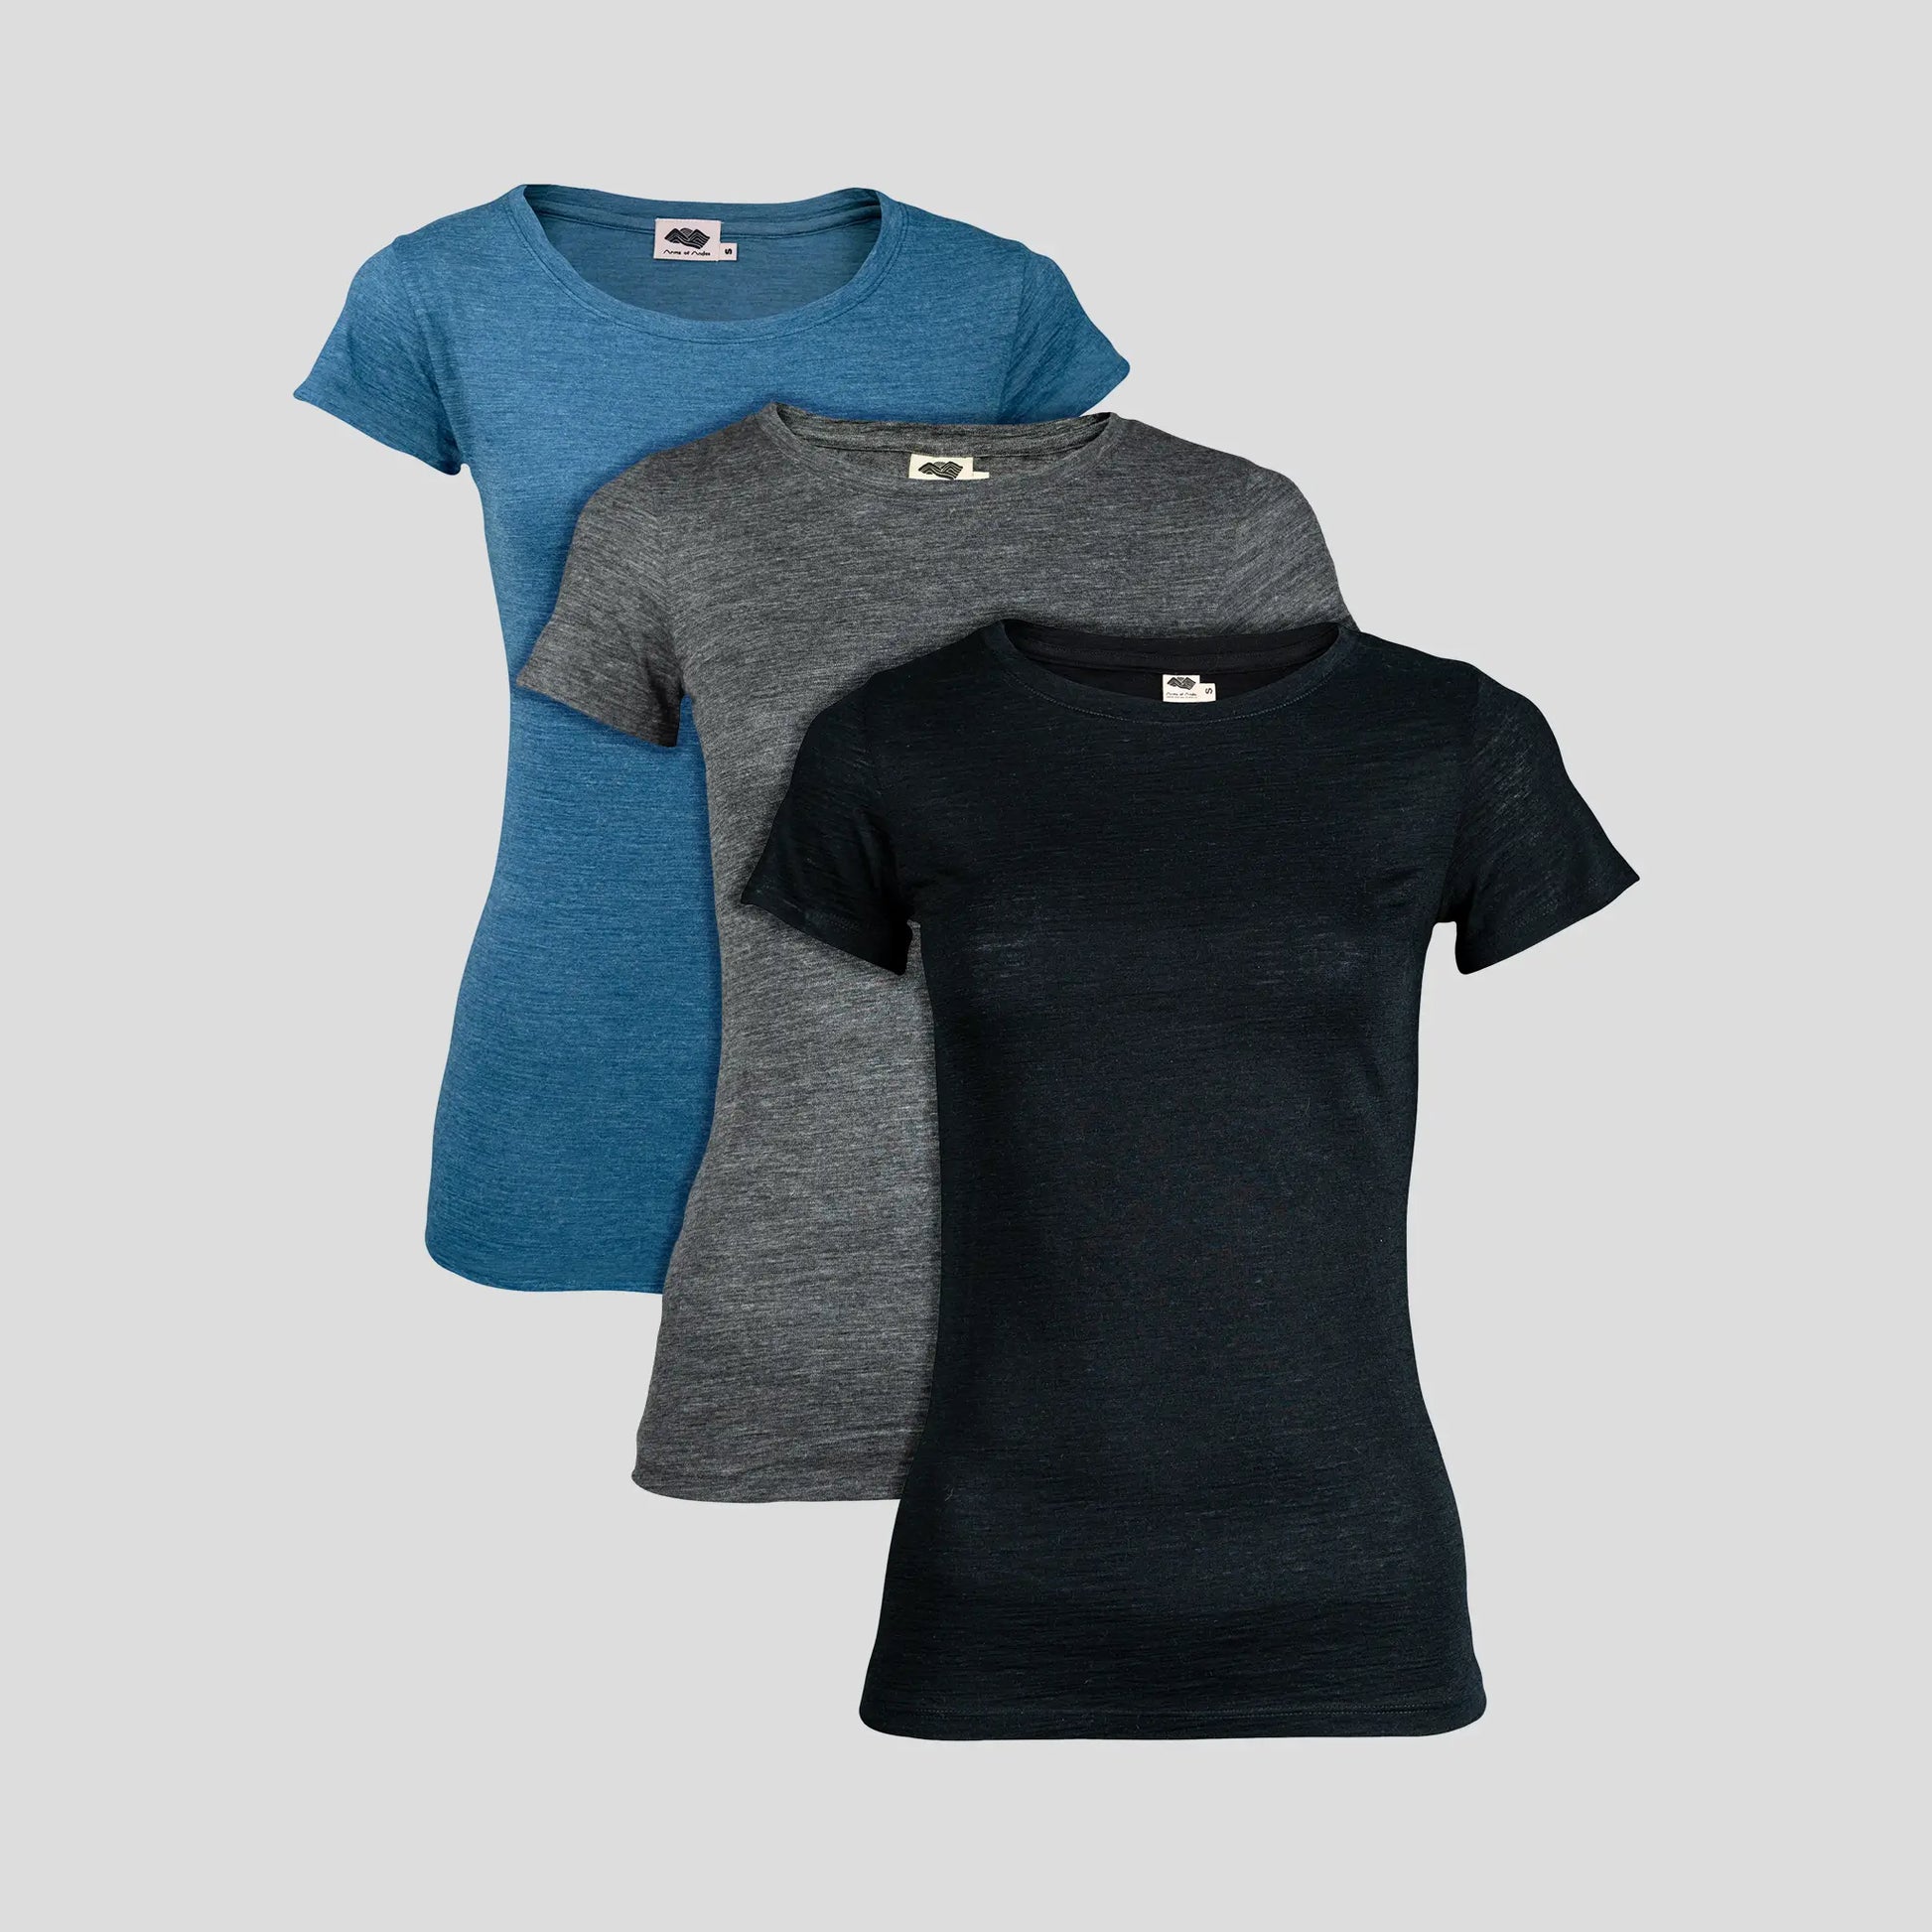 3 Pack - Women's Alpaca Wool Crew Neck T-Shirts: 160 Ultralight cover